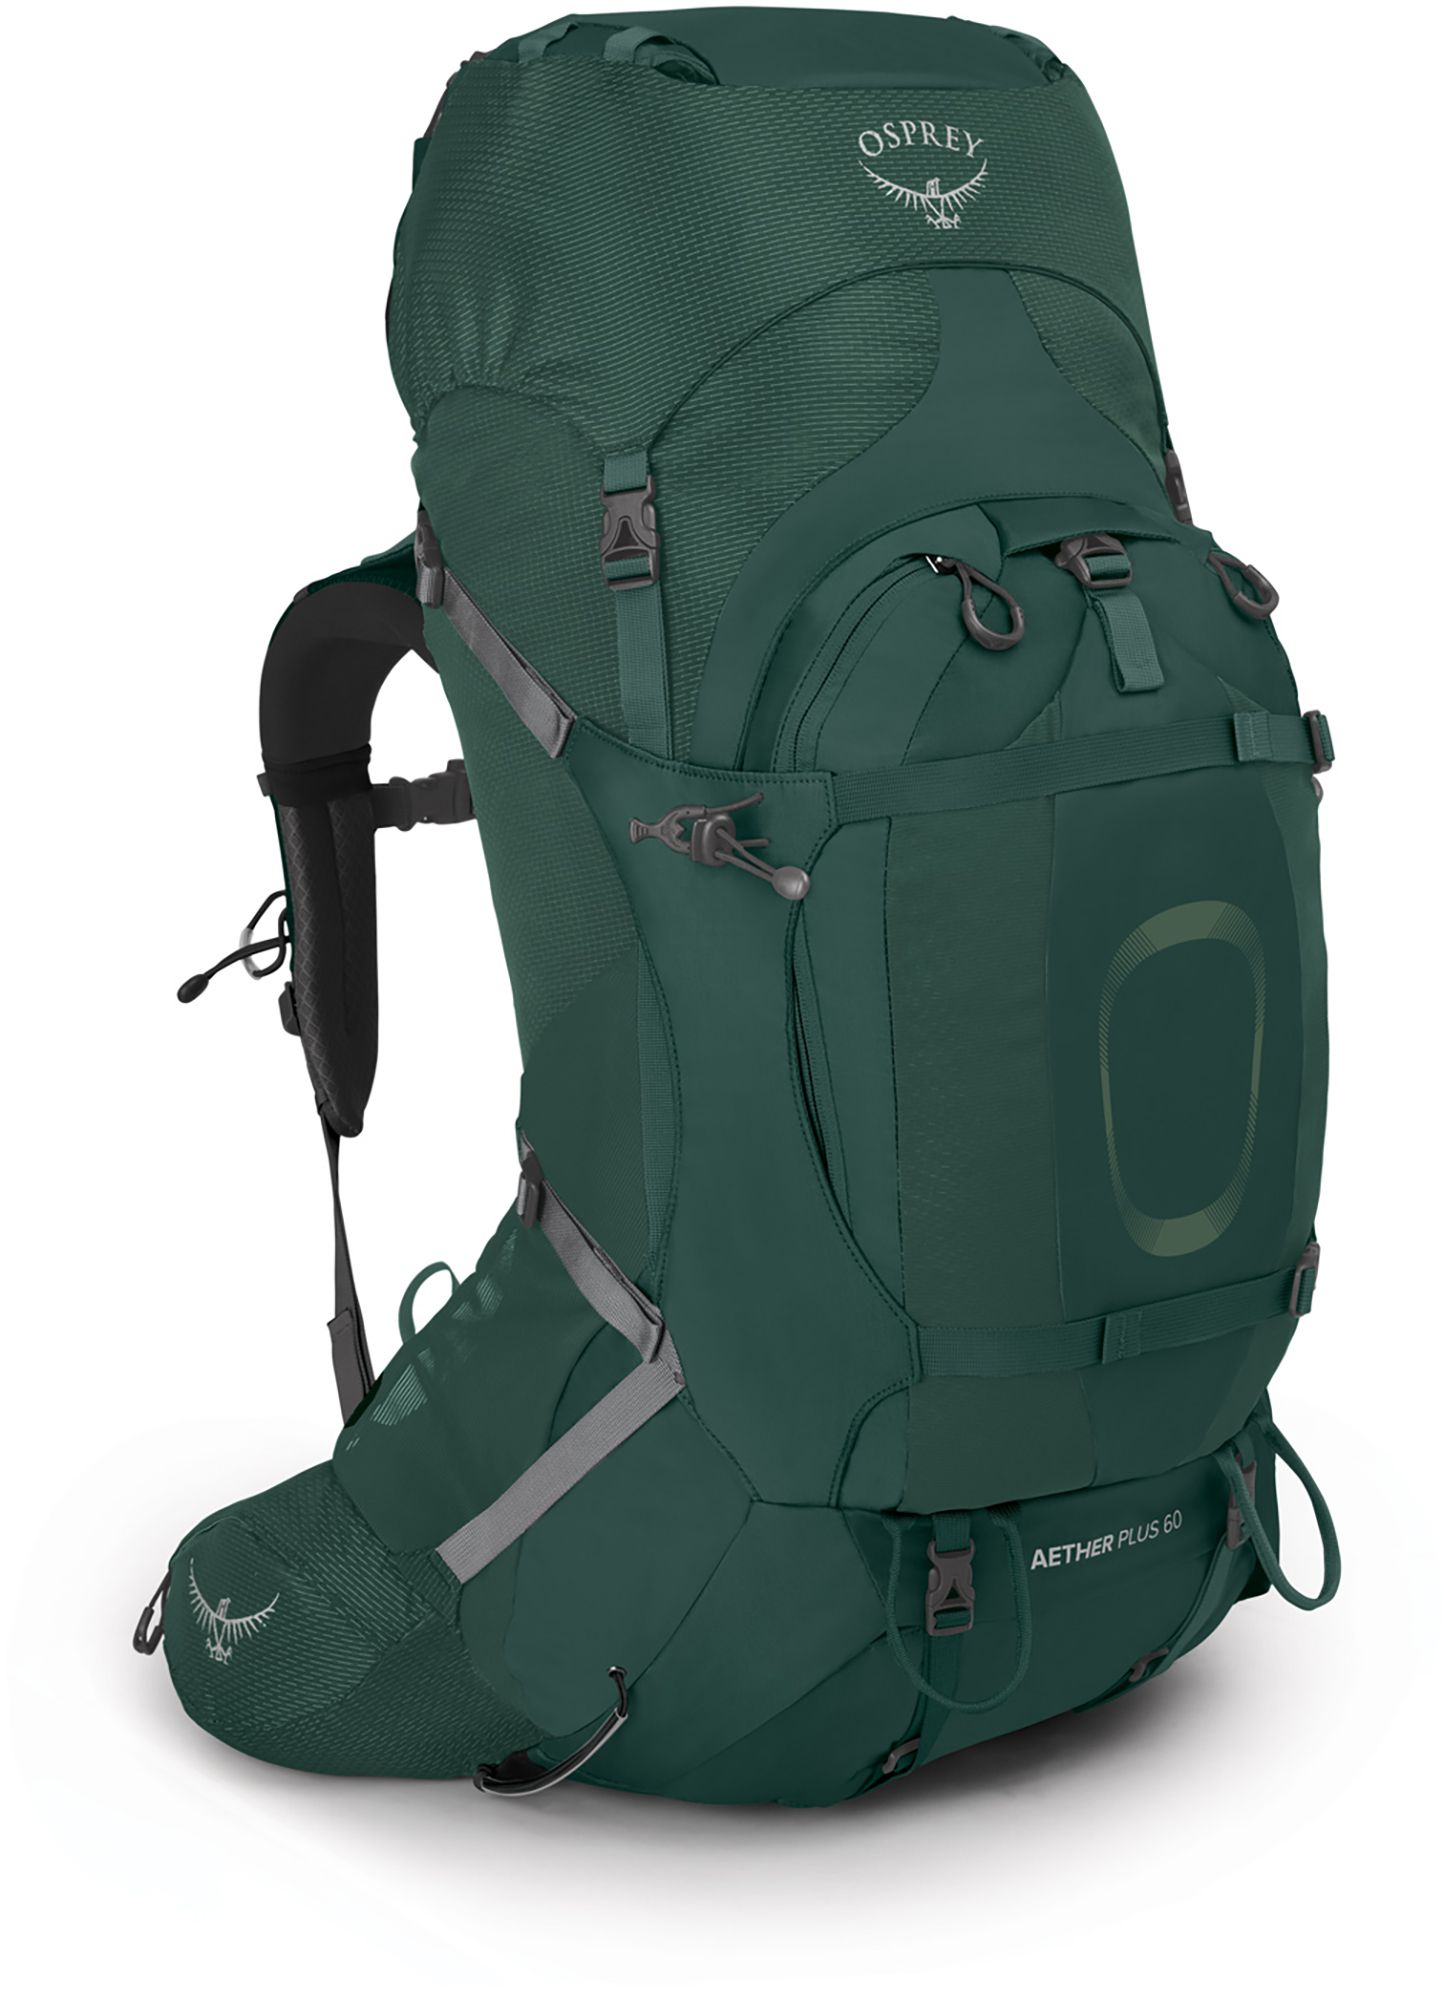 Photos - Backpack Osprey Aether Plus 60 Pack, Men's, Small/Medium, Axo Green 22TRYMTHR60XGRN 